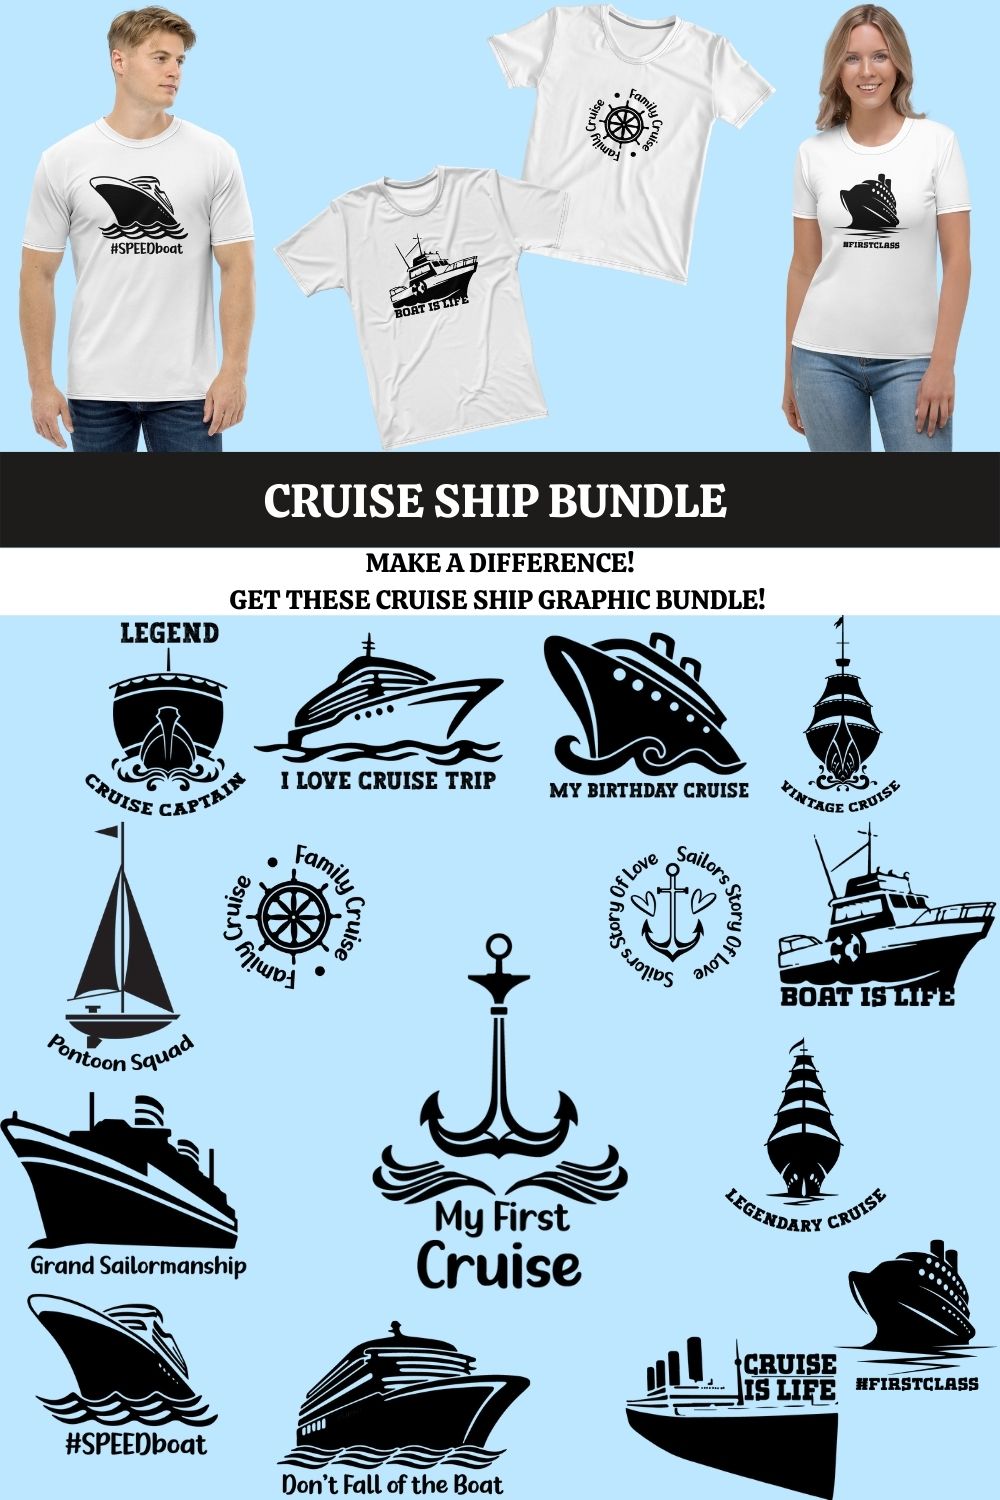 Cruise Ship Graphics Design pinterest image.